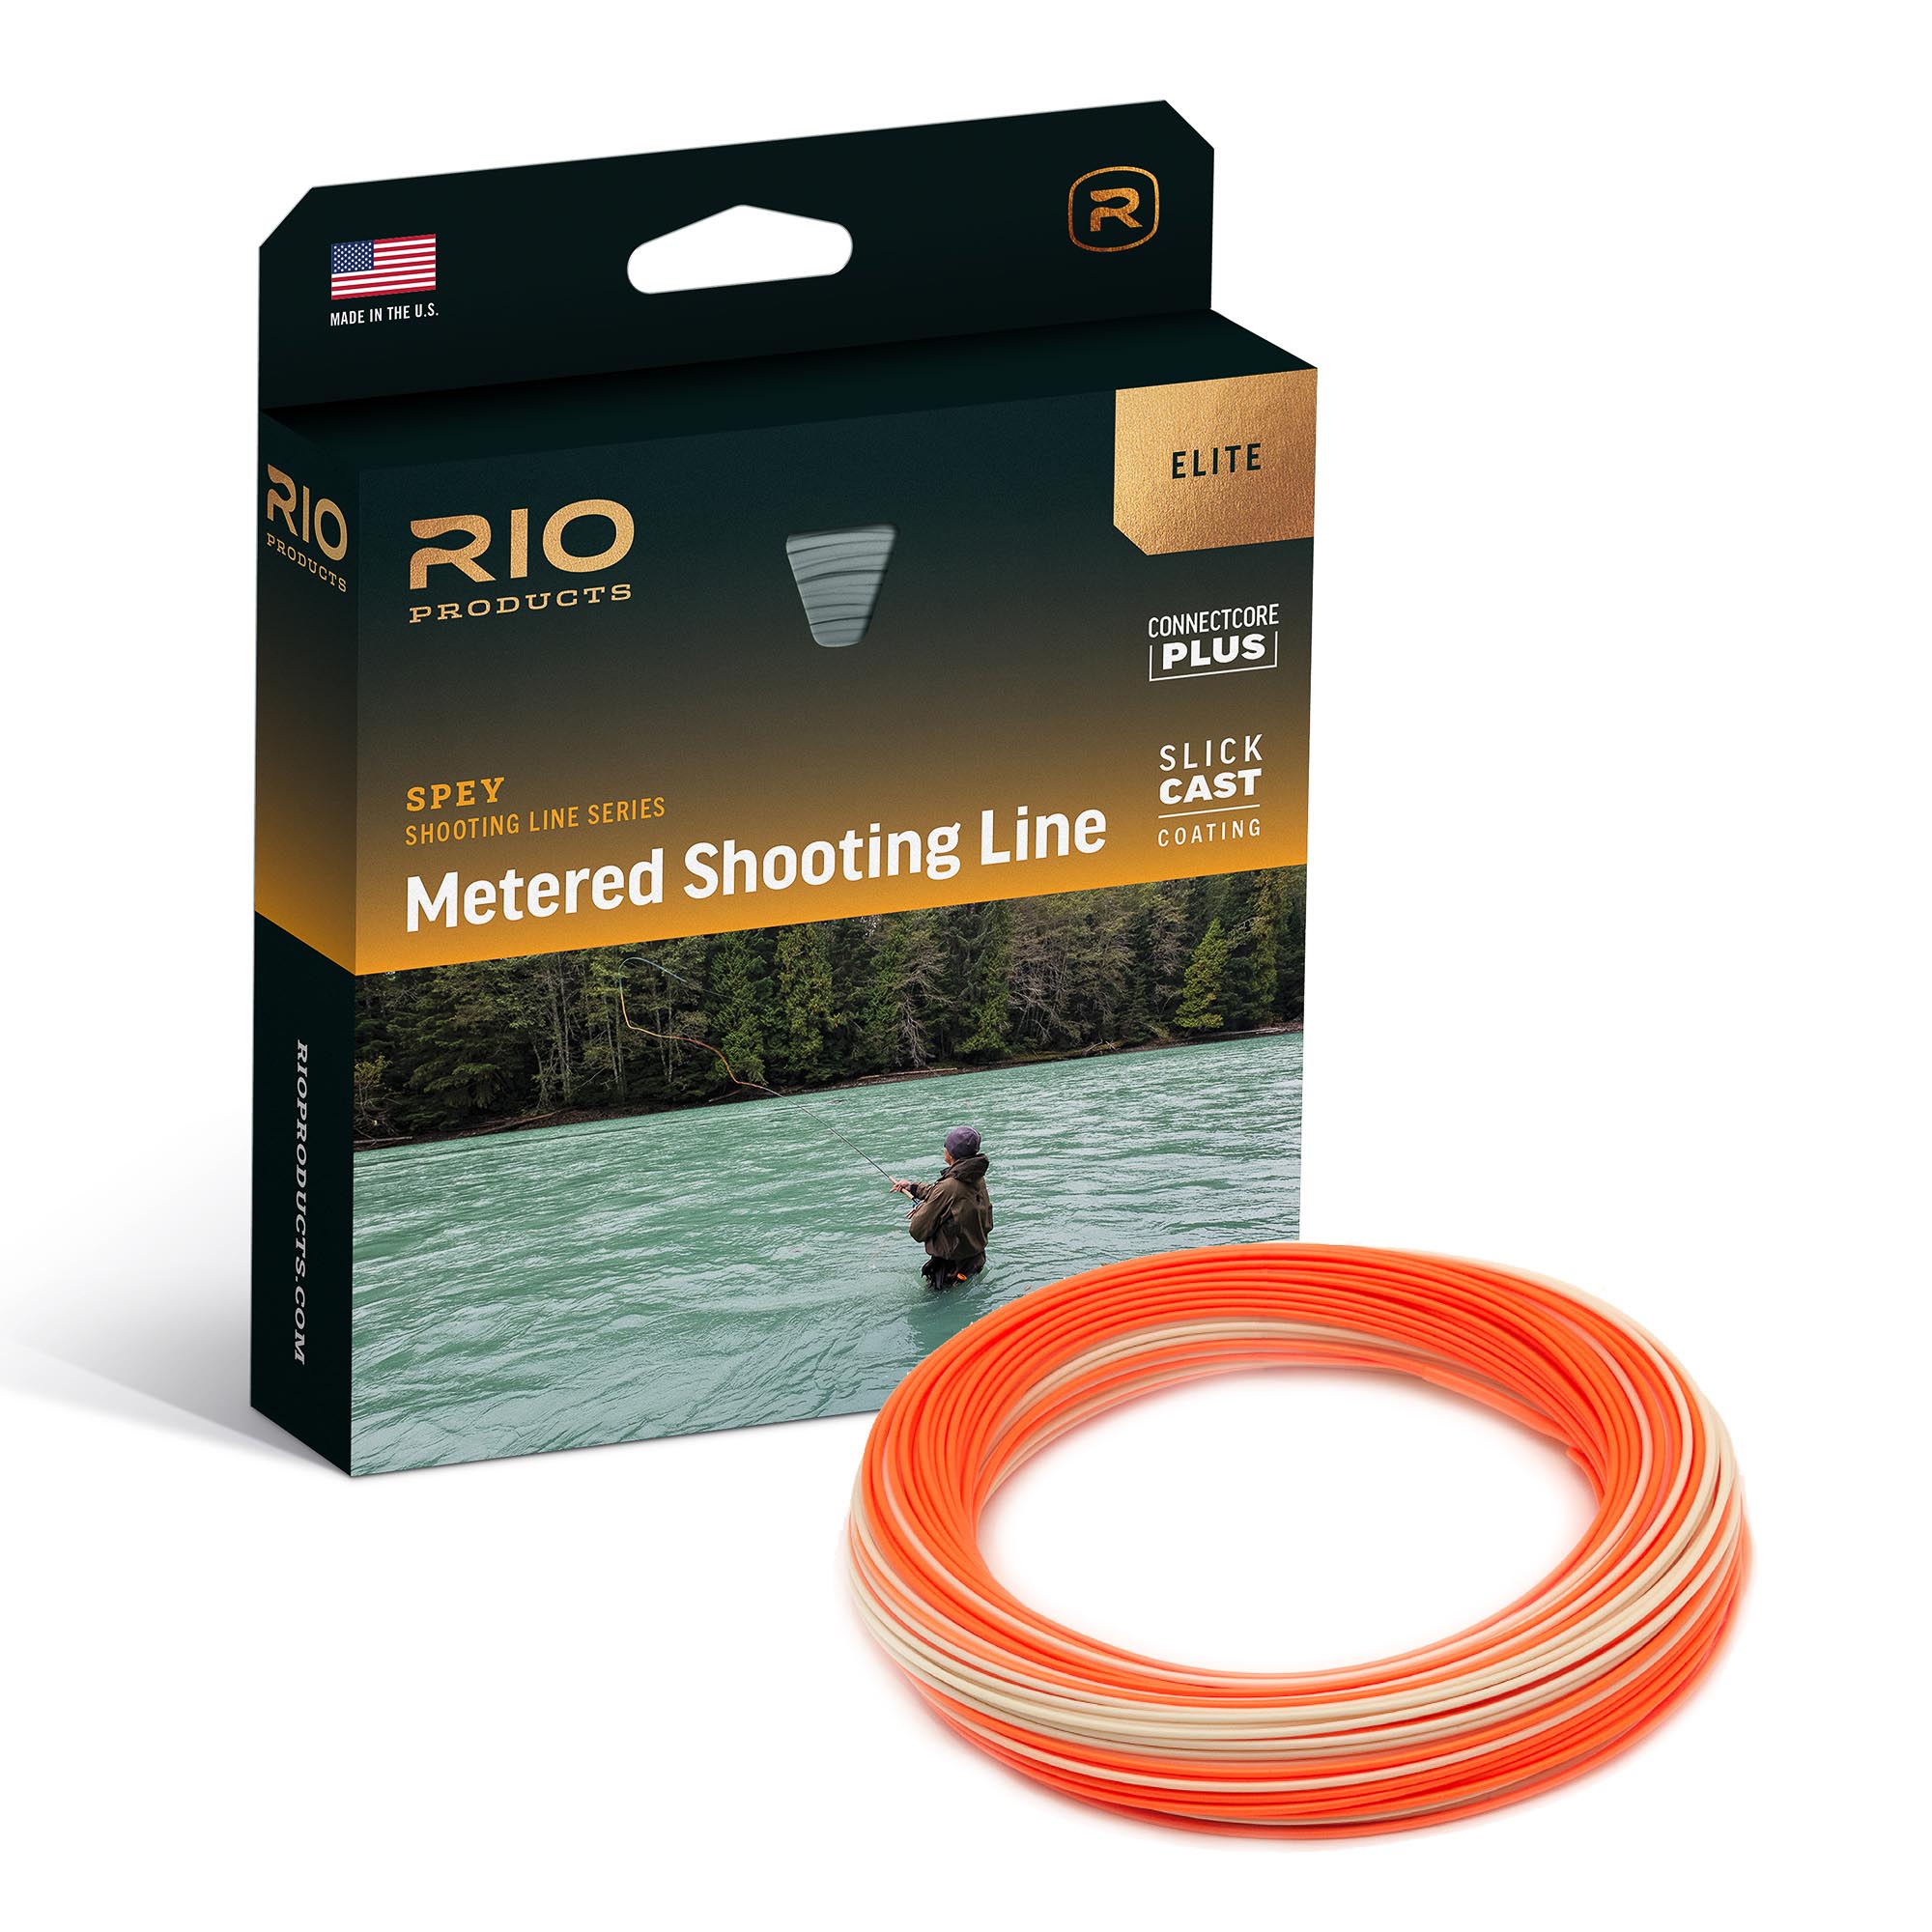 RIO Elite Metered Shooting Line – Guide Flyfishing, Fly Fishing Rods,  Reels, Sage, Redington, RIO